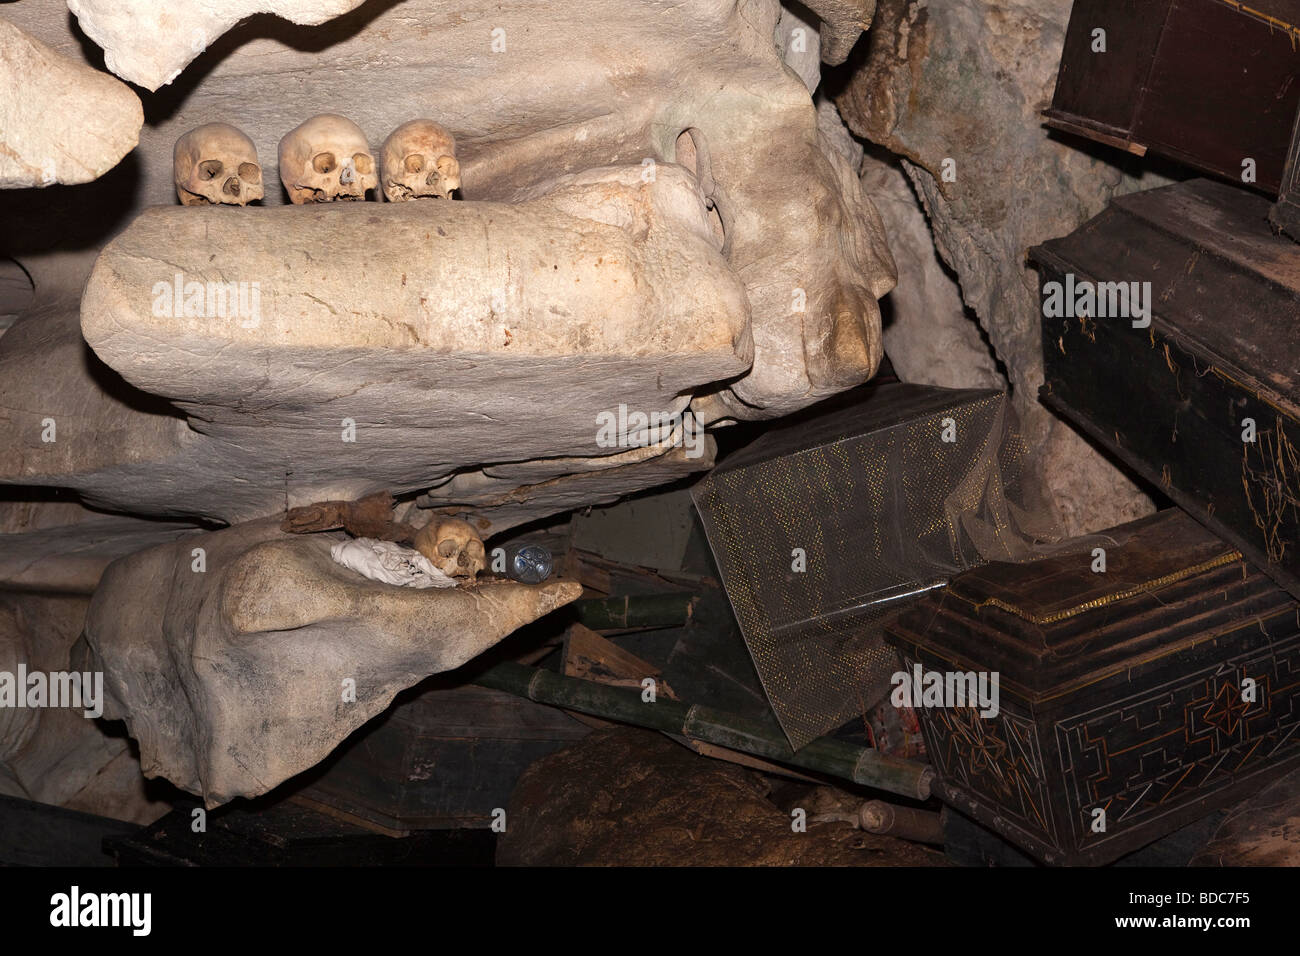 Indonesia Sulawesi Tana Toraja Londa village burial cave skulls on rock ledge above pile of coffins Stock Photo